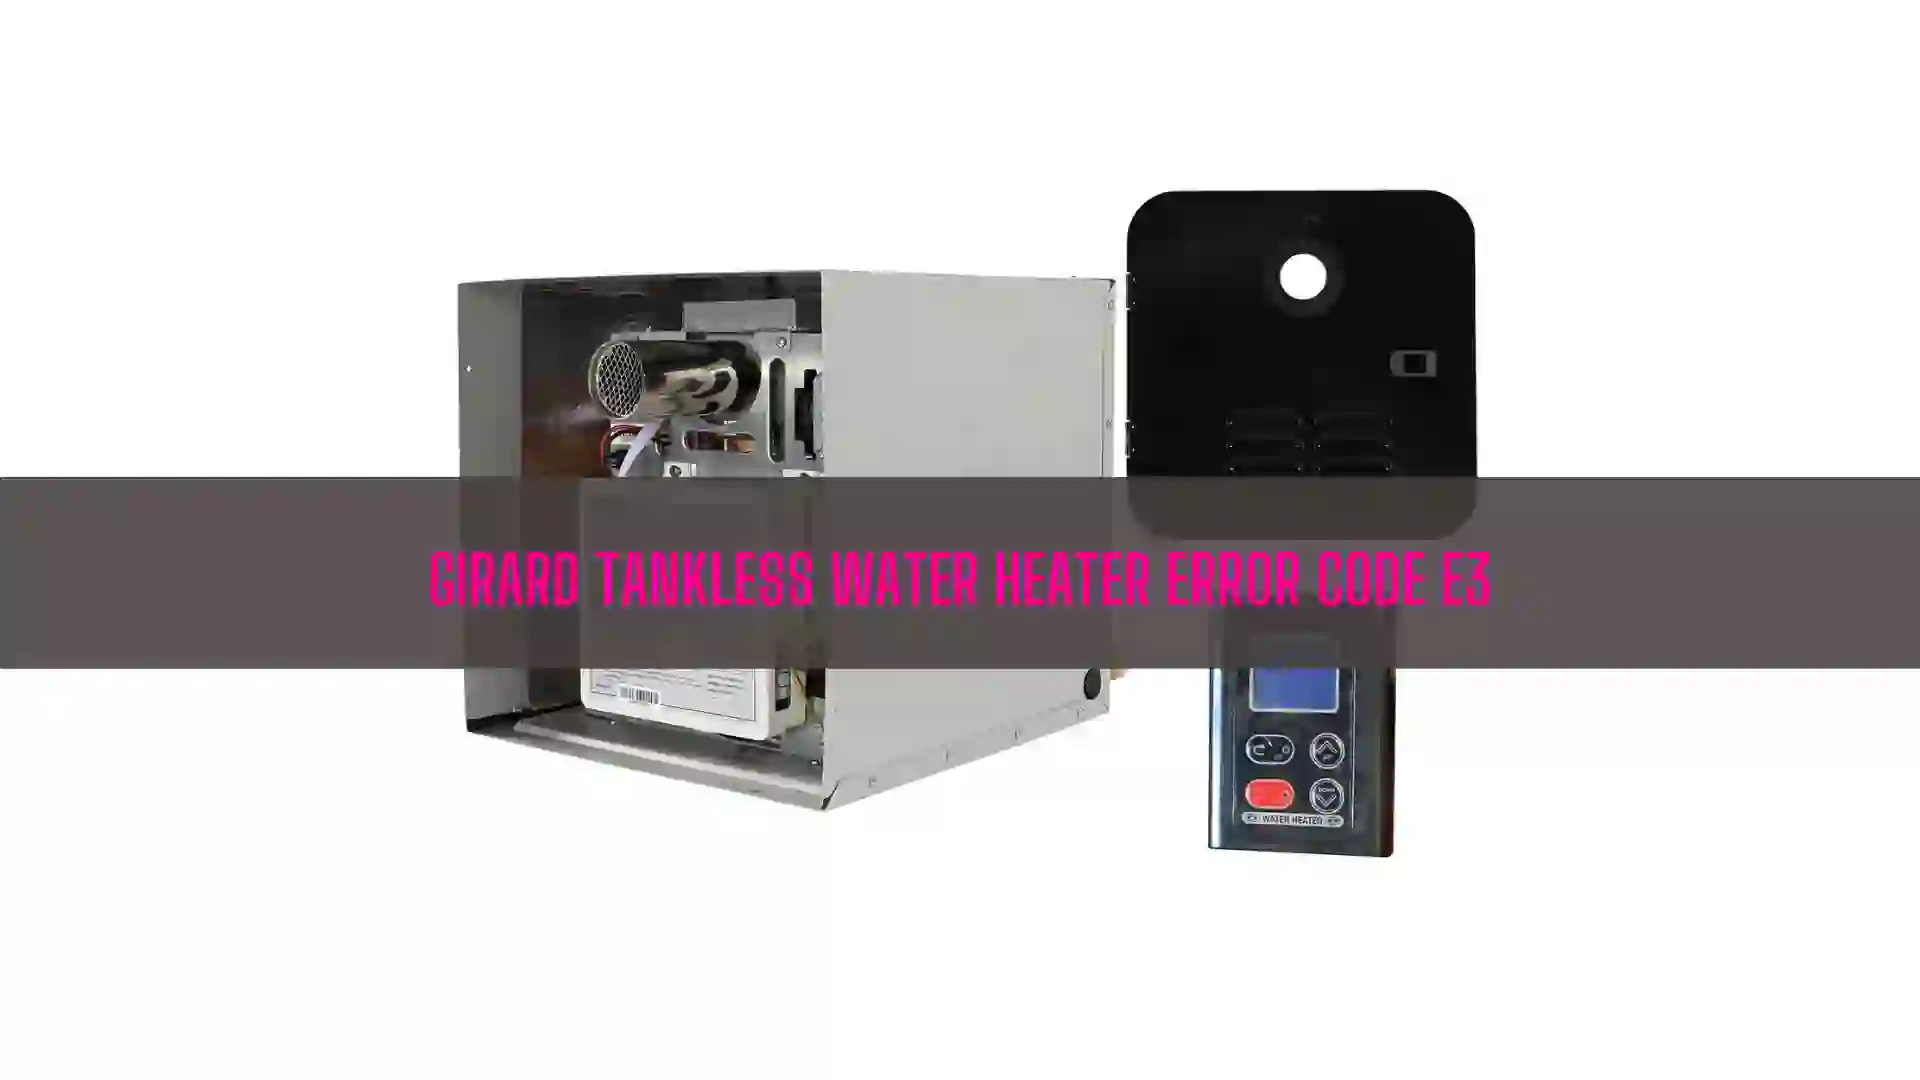 Girard Tankless Water Heater Error Code E3